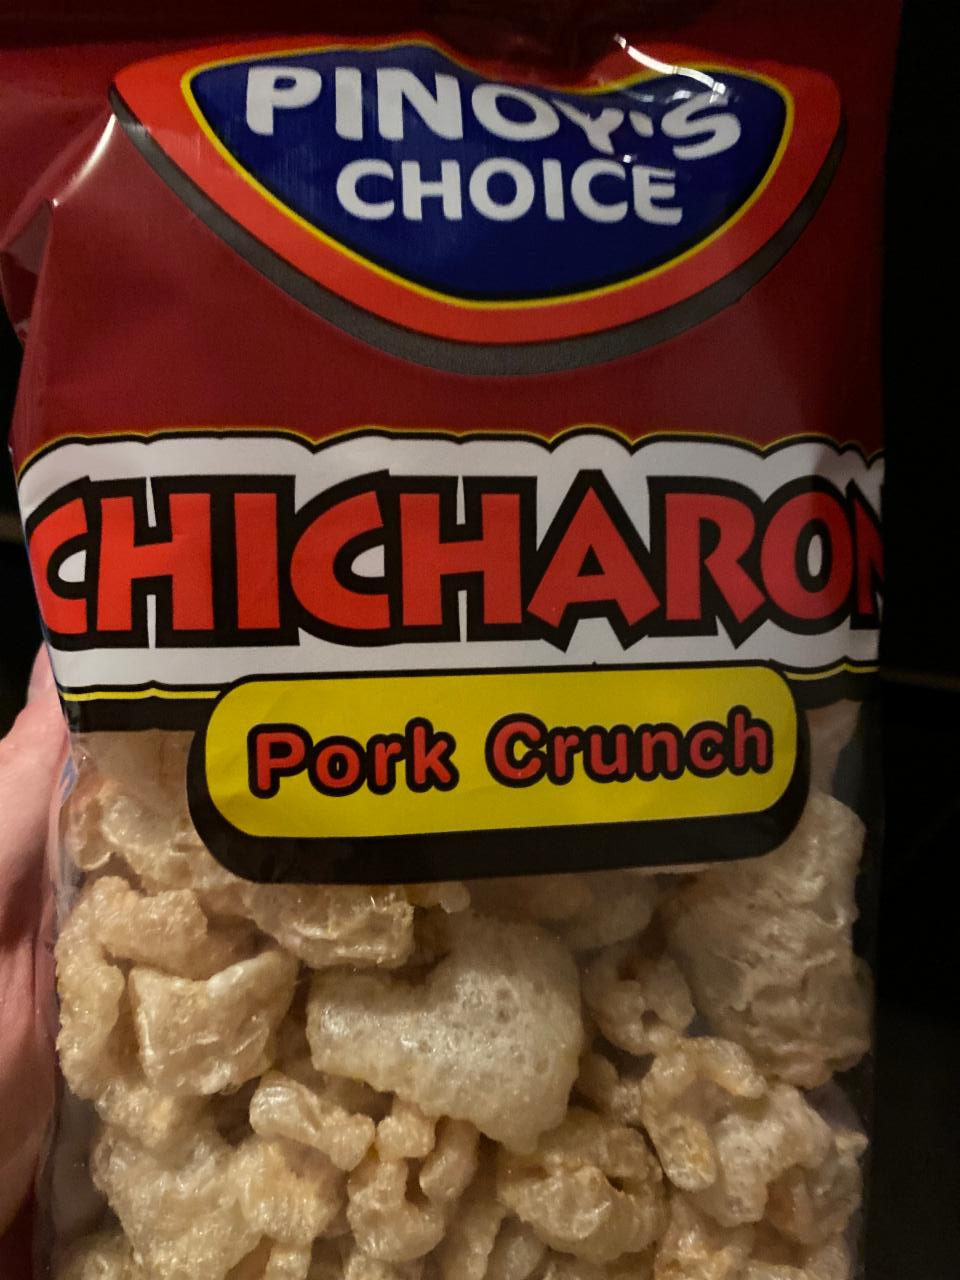 Fotografie - Chicharon Pork Crunch Pinoy's Choice